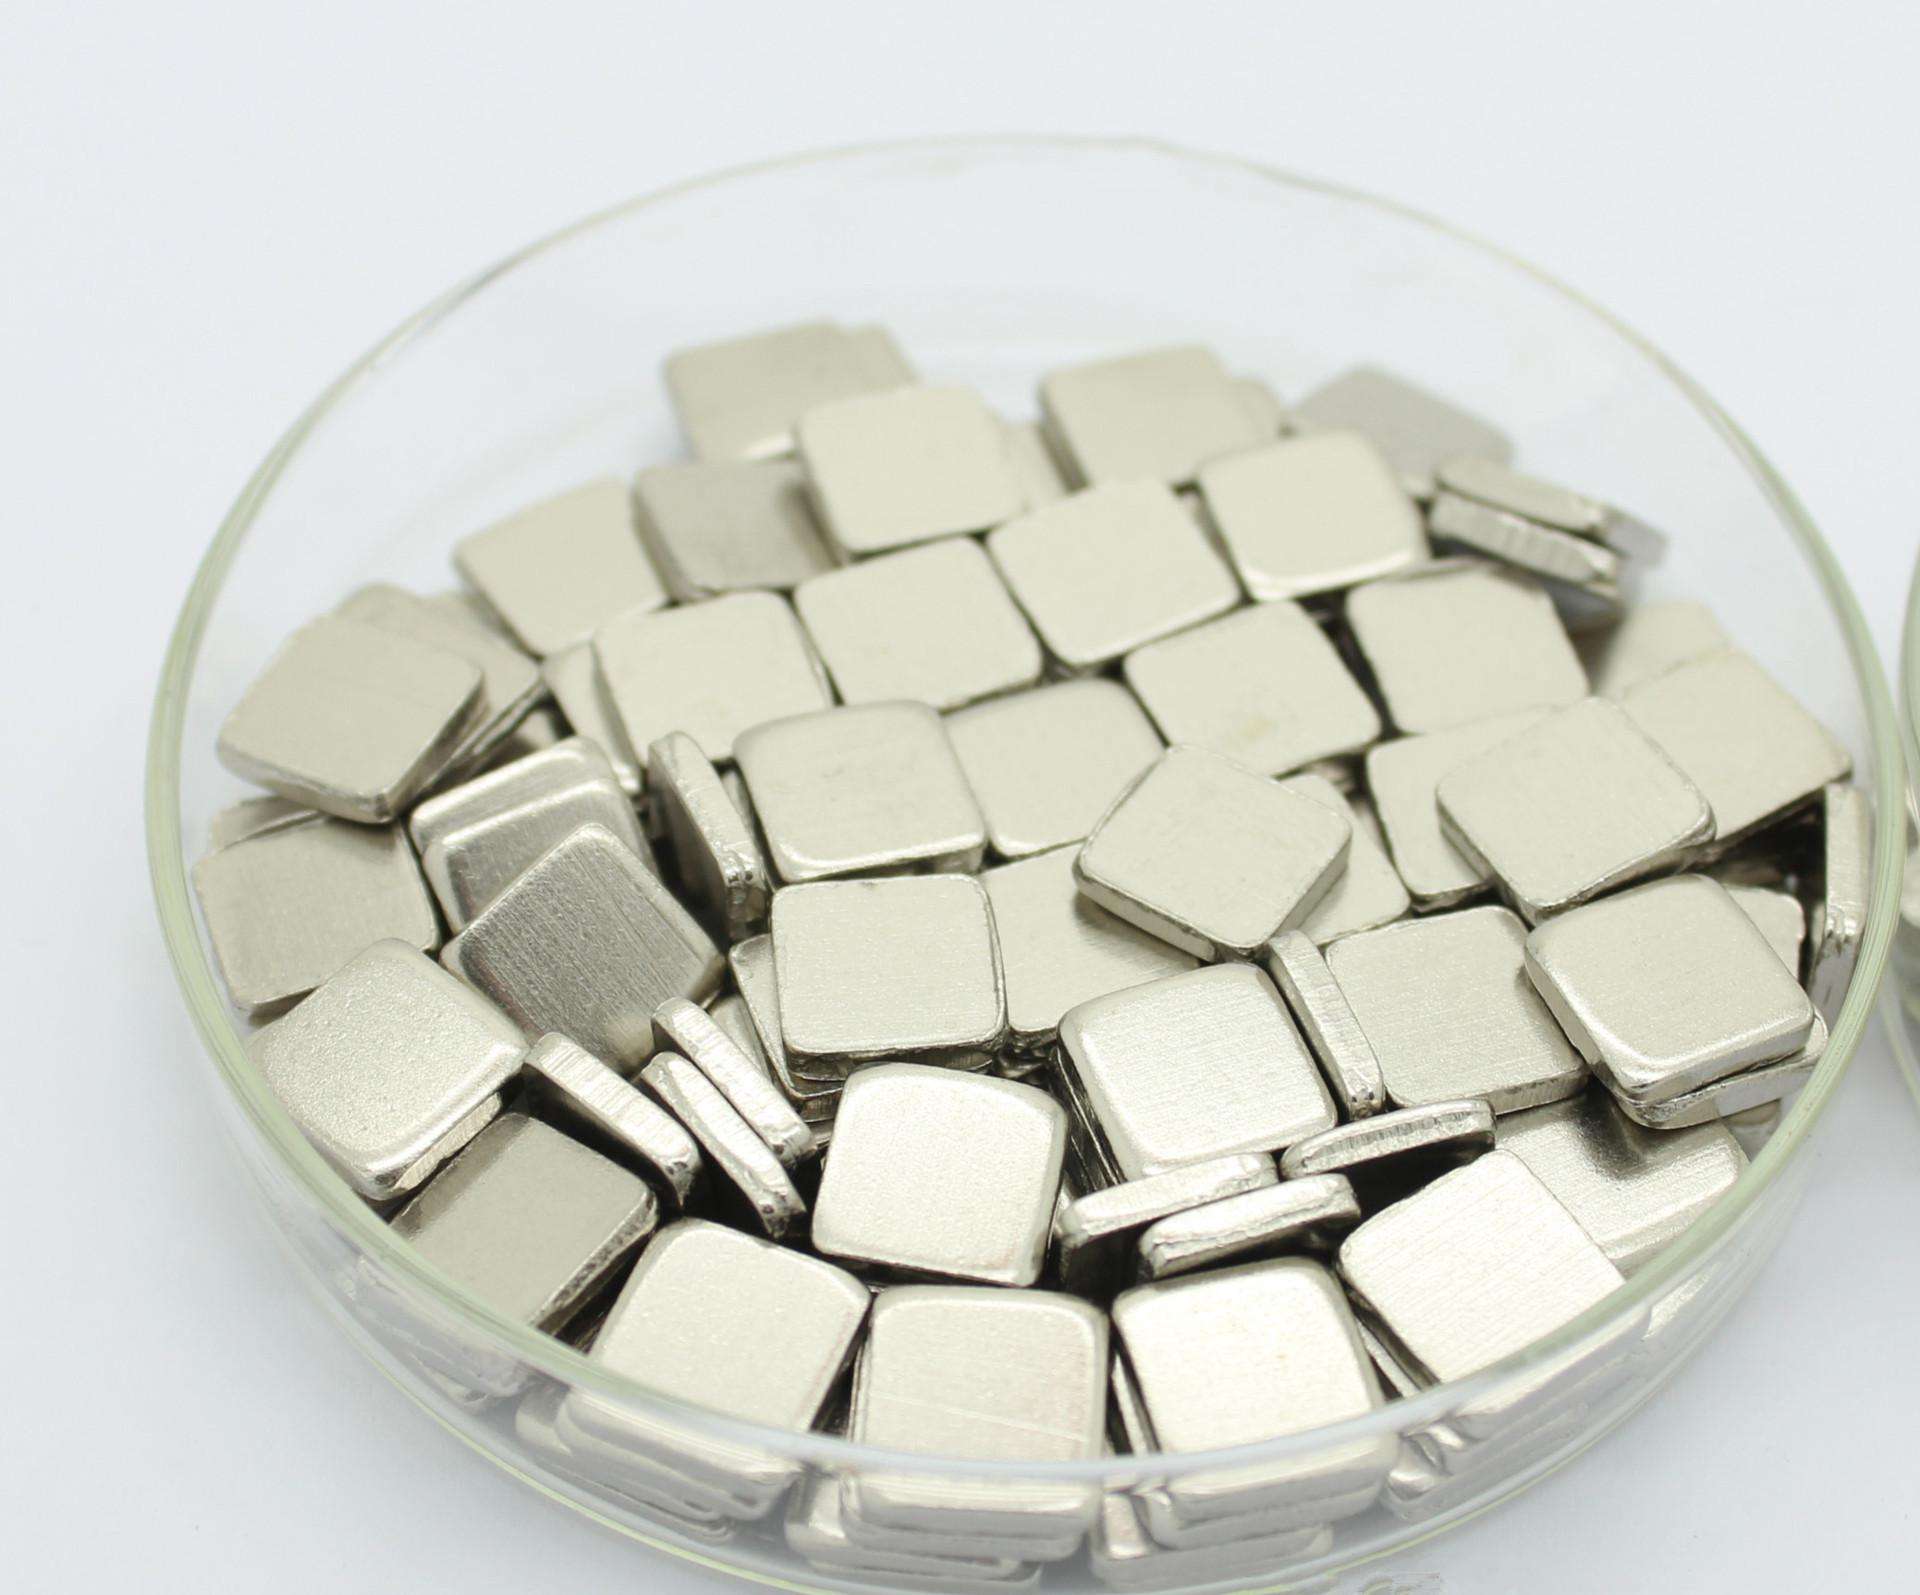 0.23 gram solid Palladium metal pellet 99.95% element 45 sample 